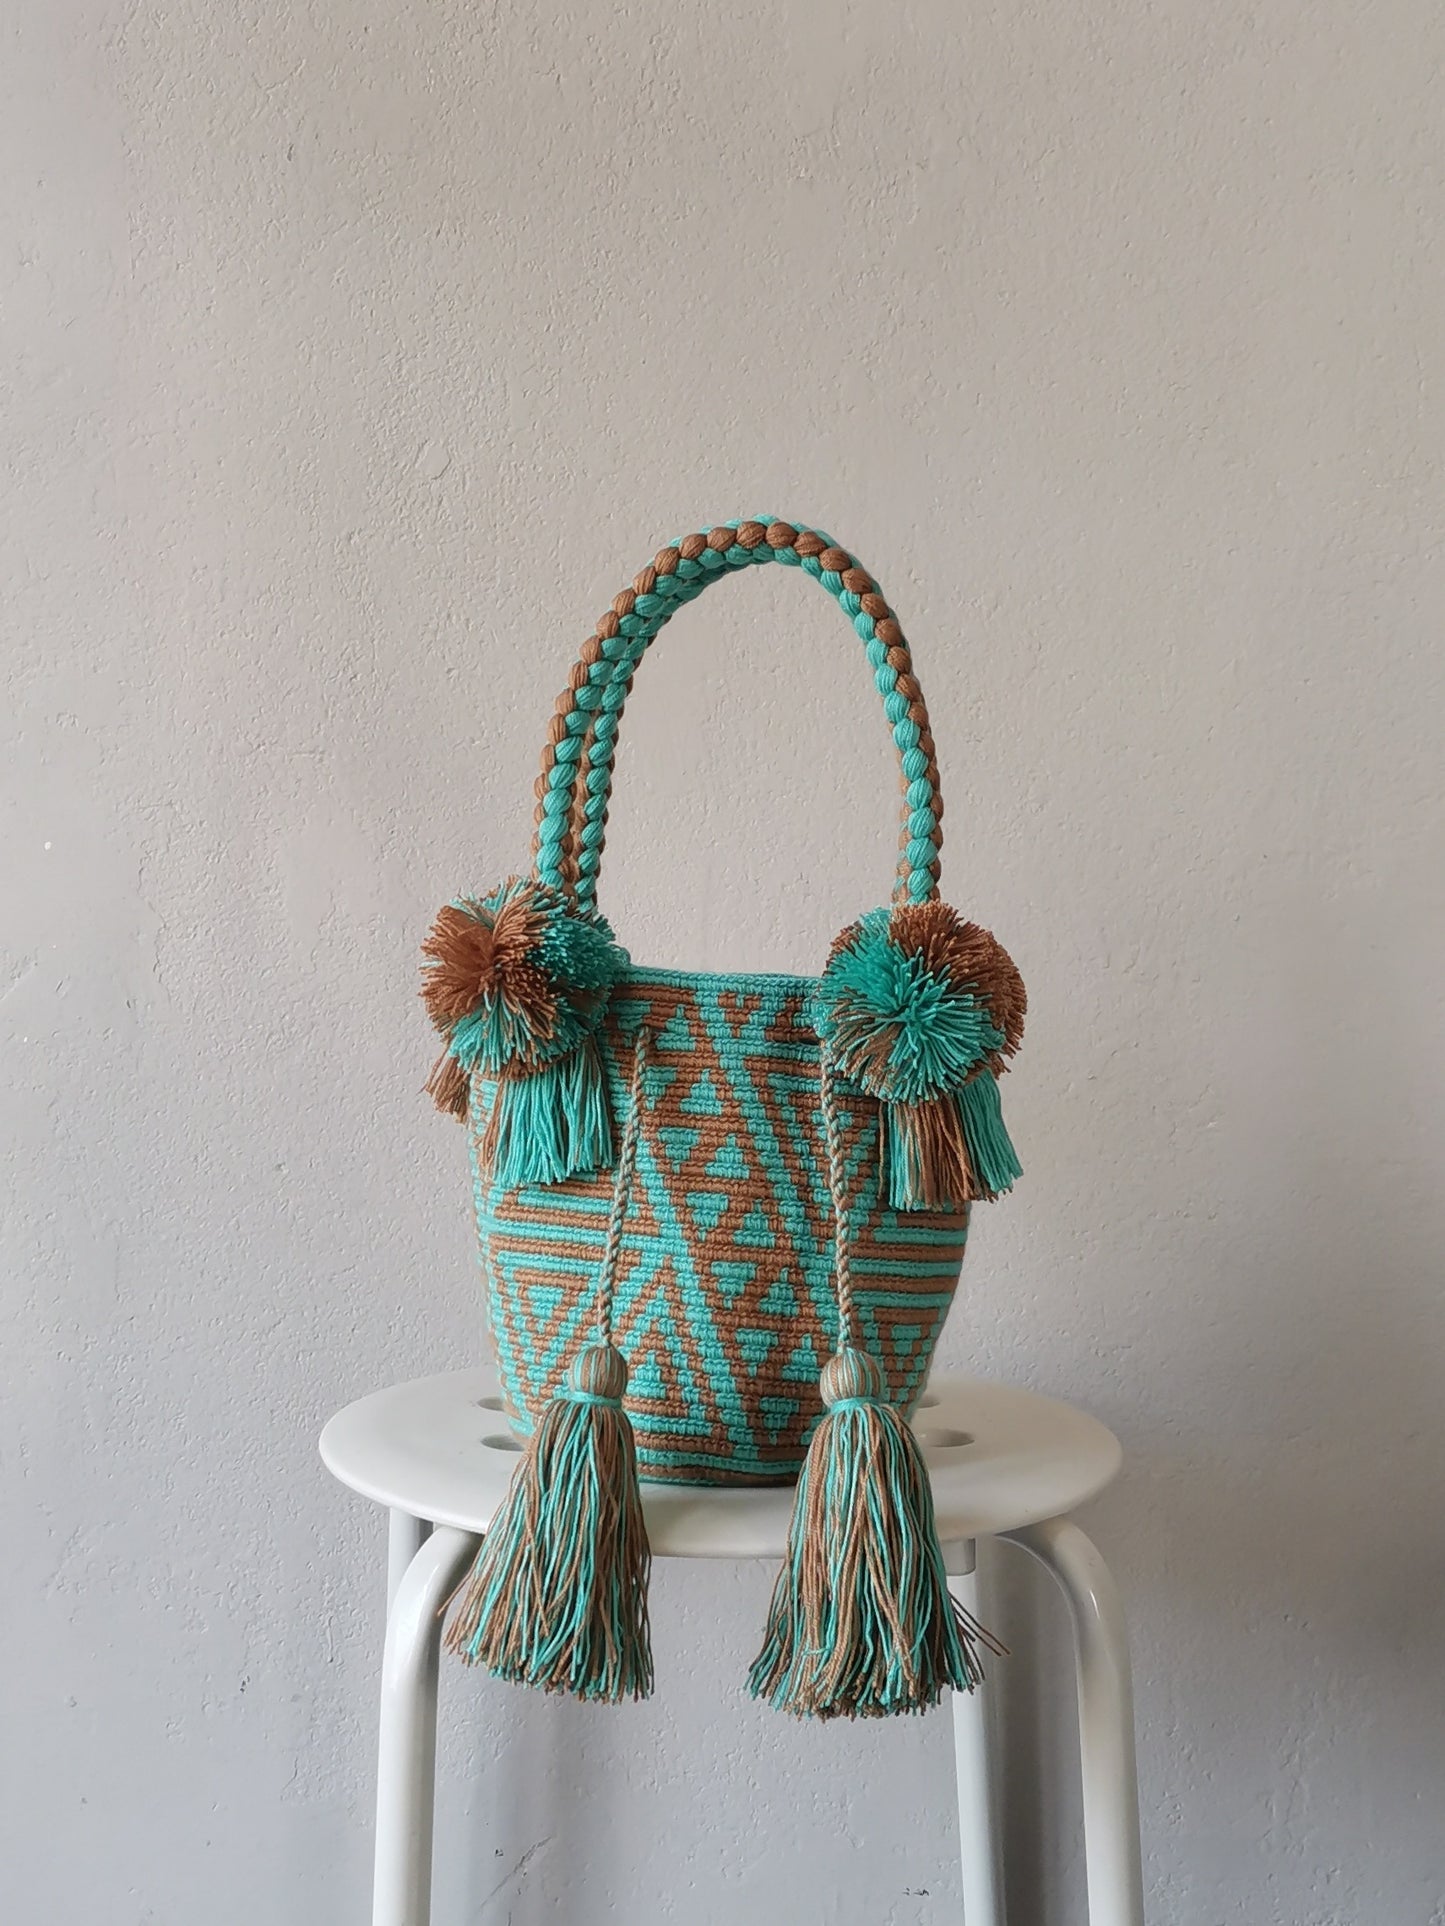 Mochila handbag S cappuccino beige and Tiffany blue